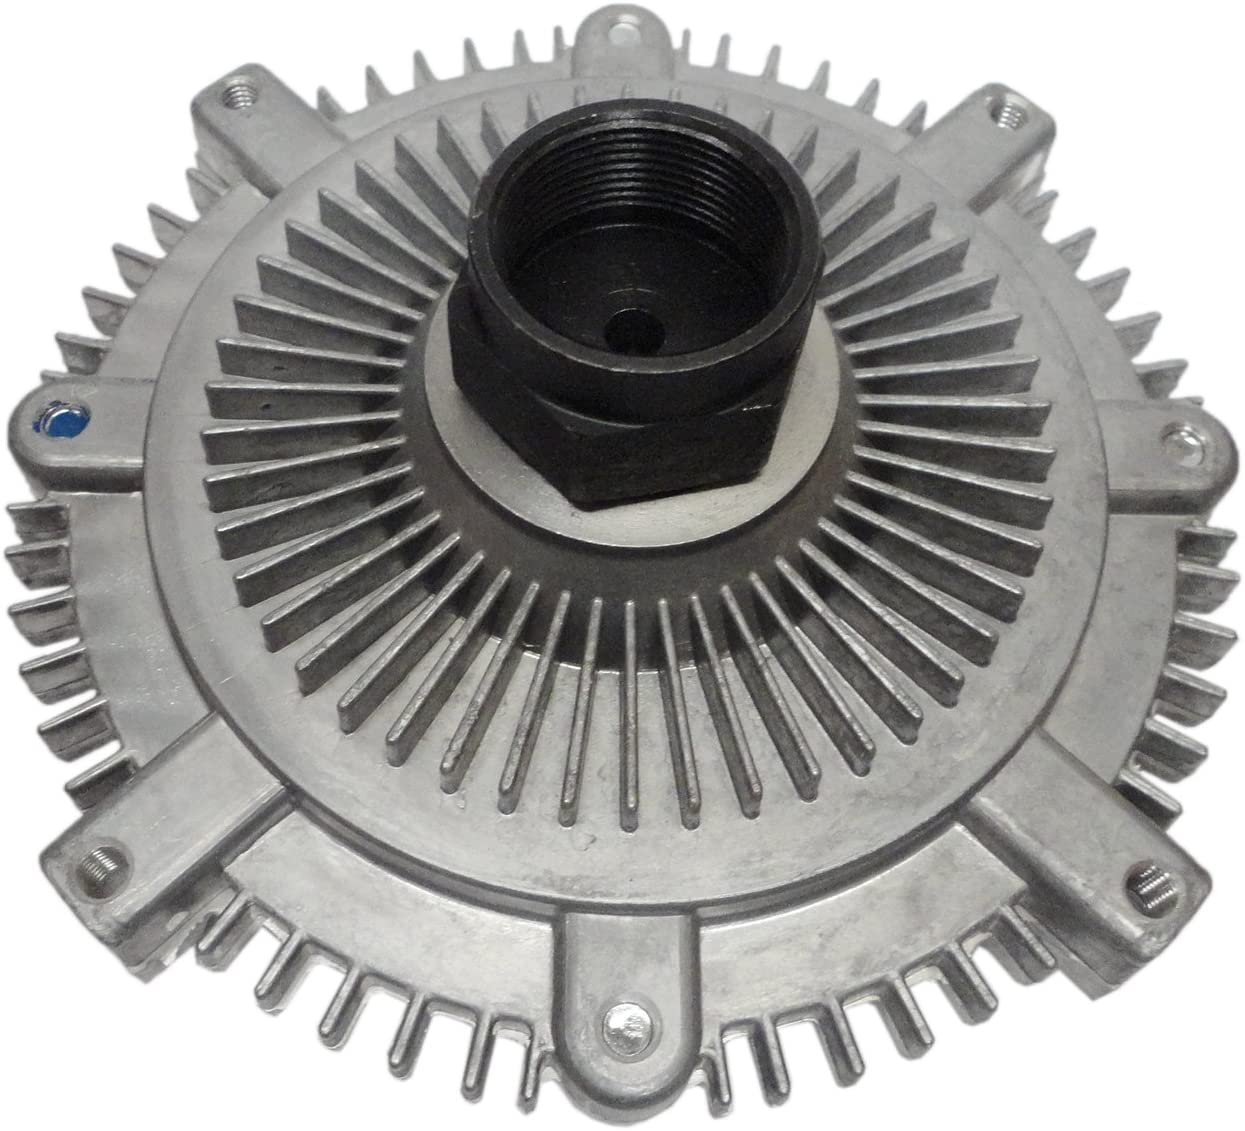 TOPAZ 2675 Engine Cooling Thermal Fan Clutch for 05-11 Ford Ranger 2.3L L4